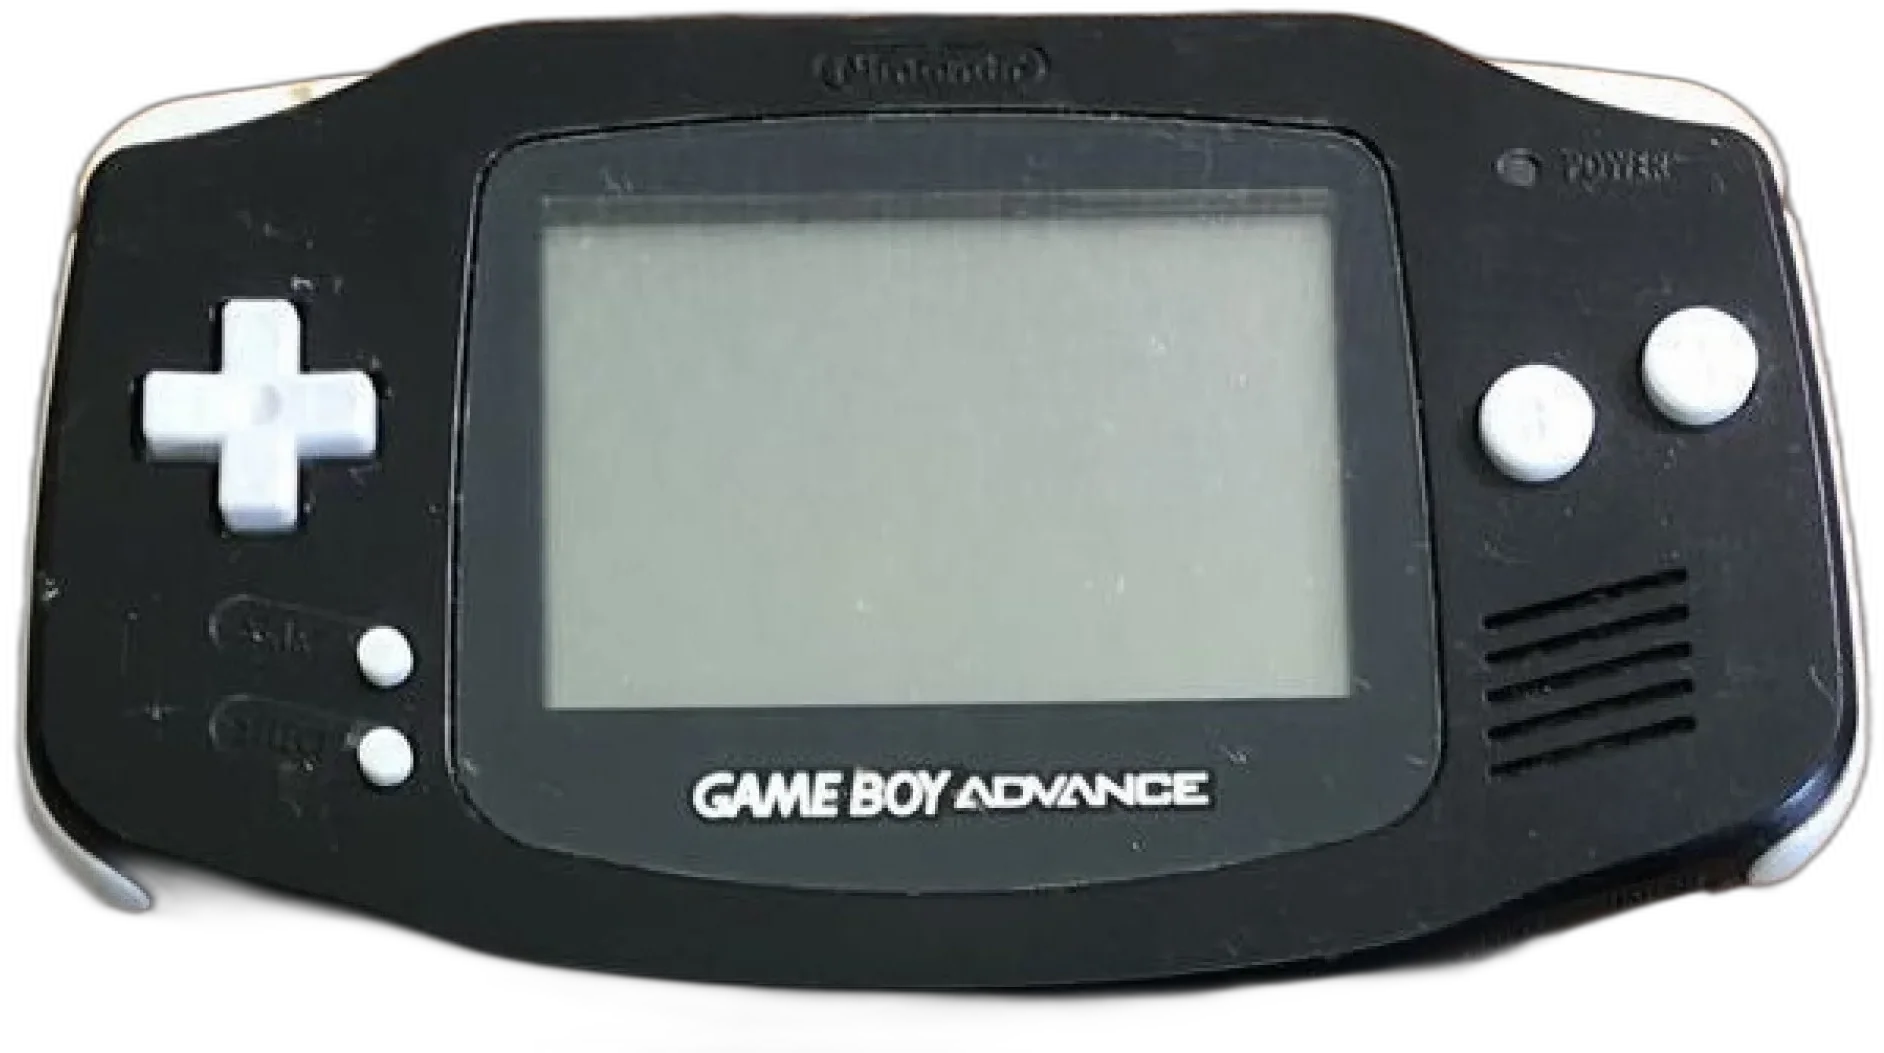 Nintendo Game Boy Advance Black Console [AUS]